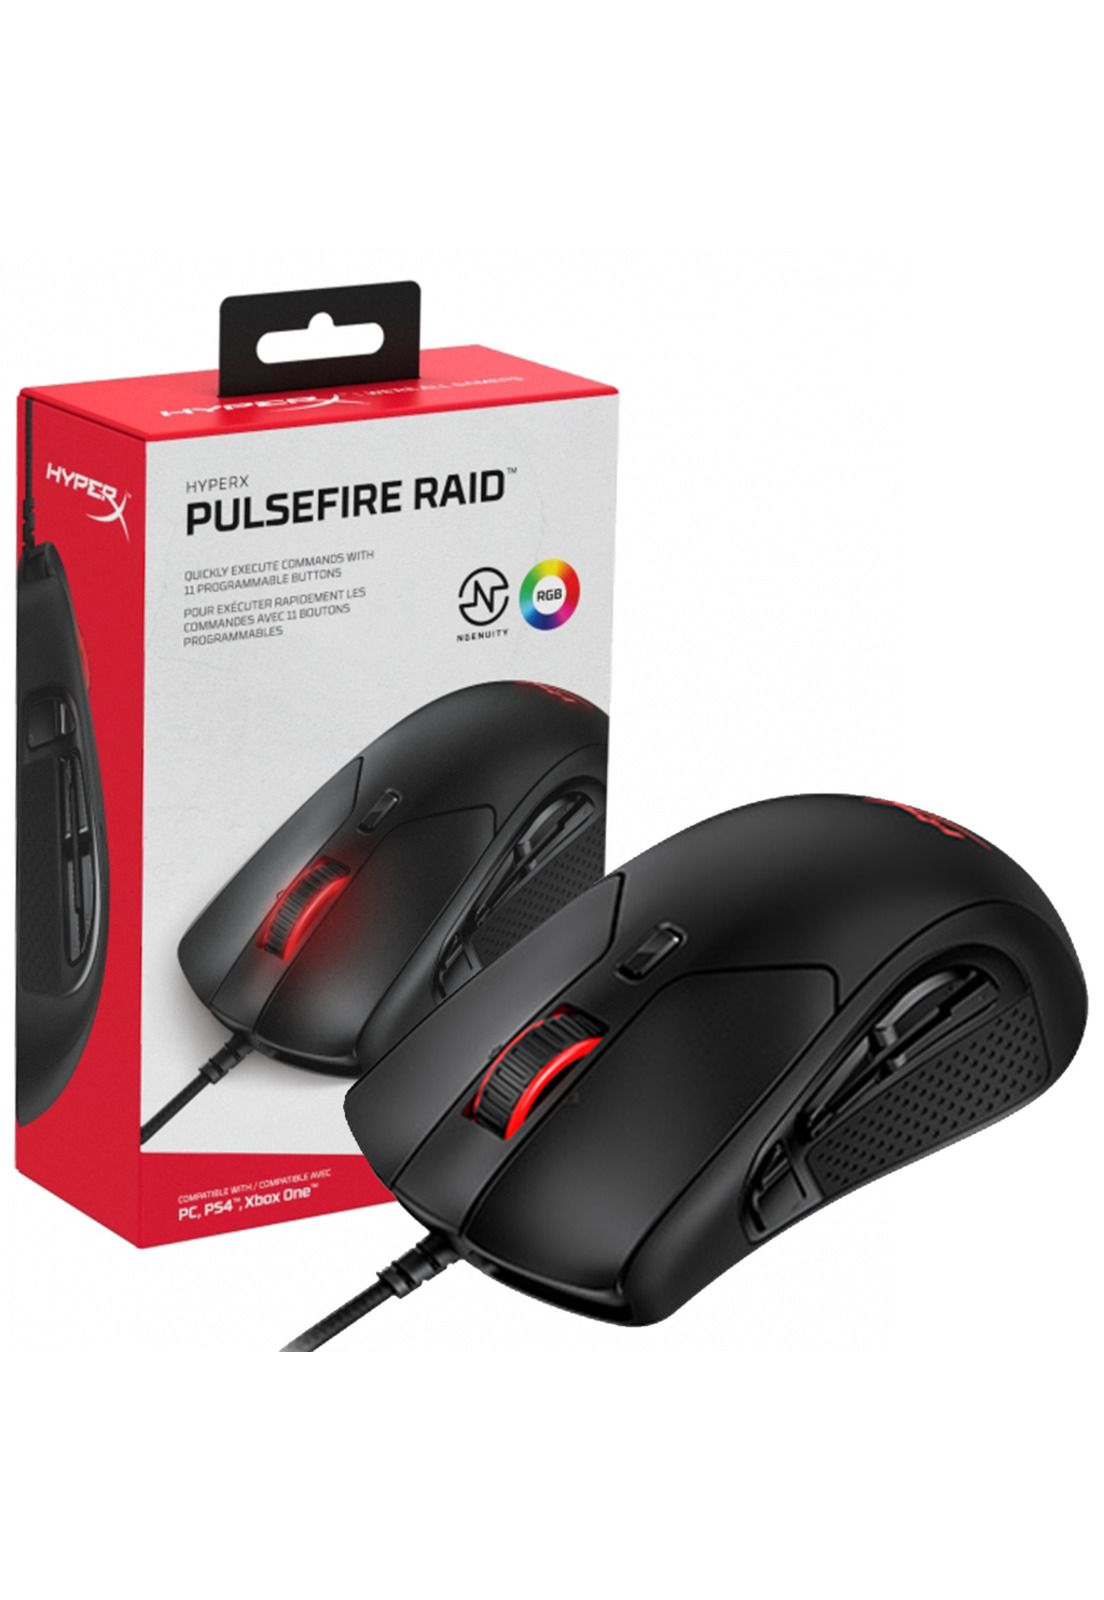 Mouse Gamer HyperX Pulsefire Raid Sensor Premium Pixart 3389 RGB, ultraliviano